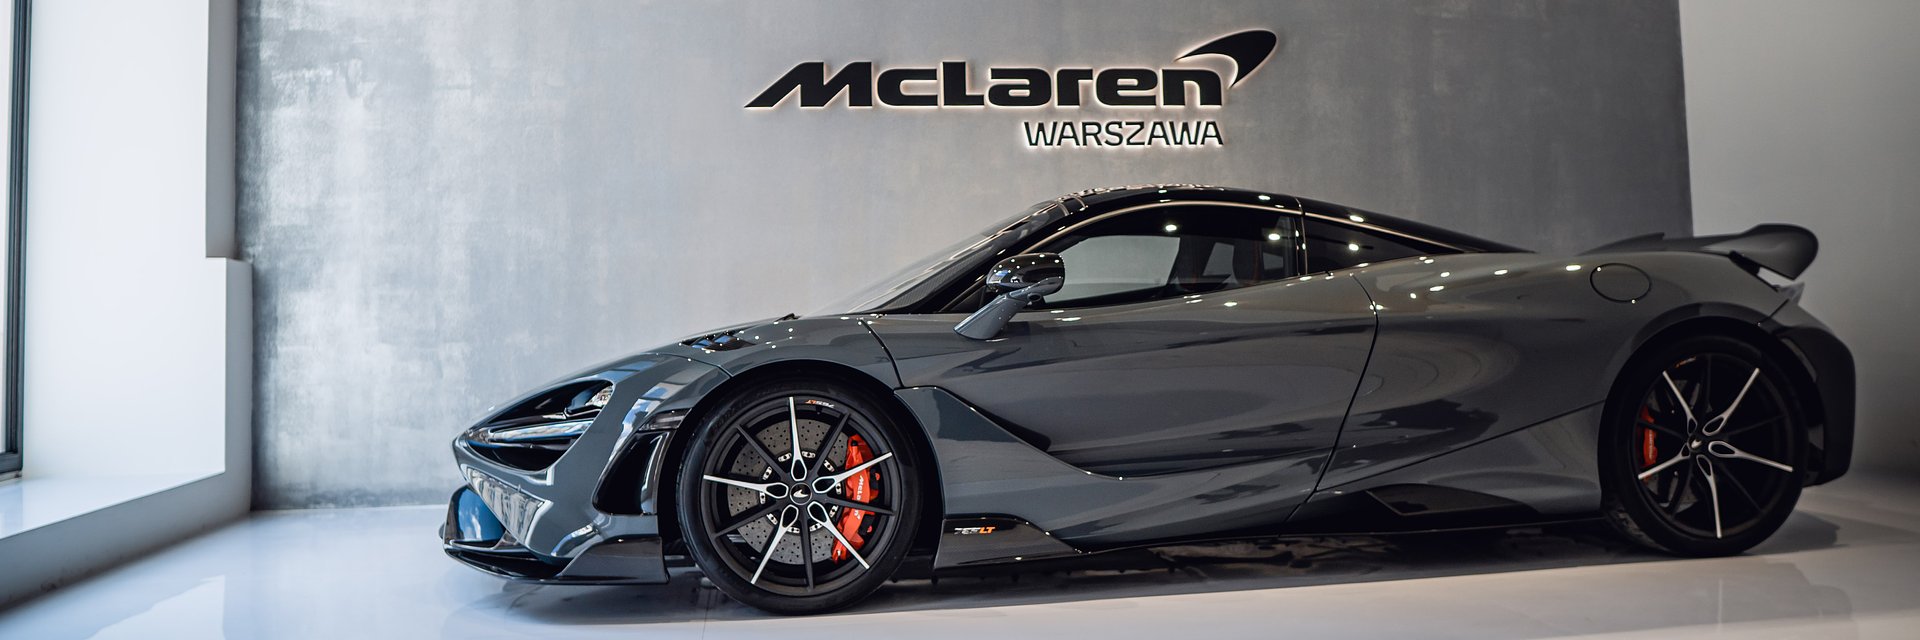 McLaren w Warszawie